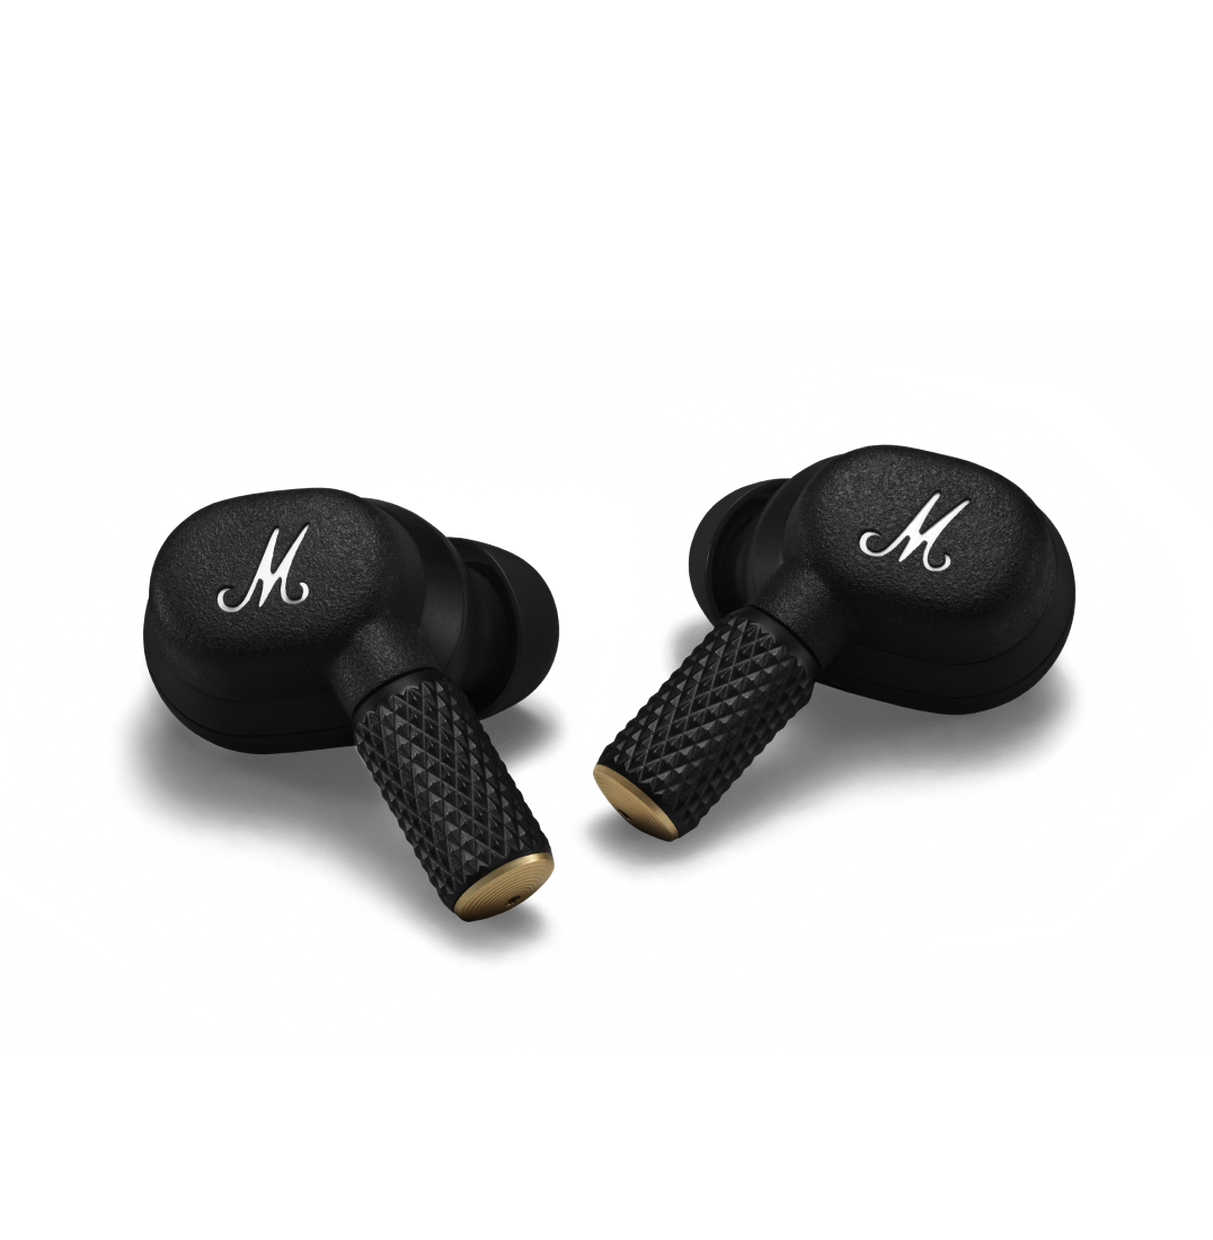 Marshall Motif 2 A.N.C in-Ear TWS Earbuds